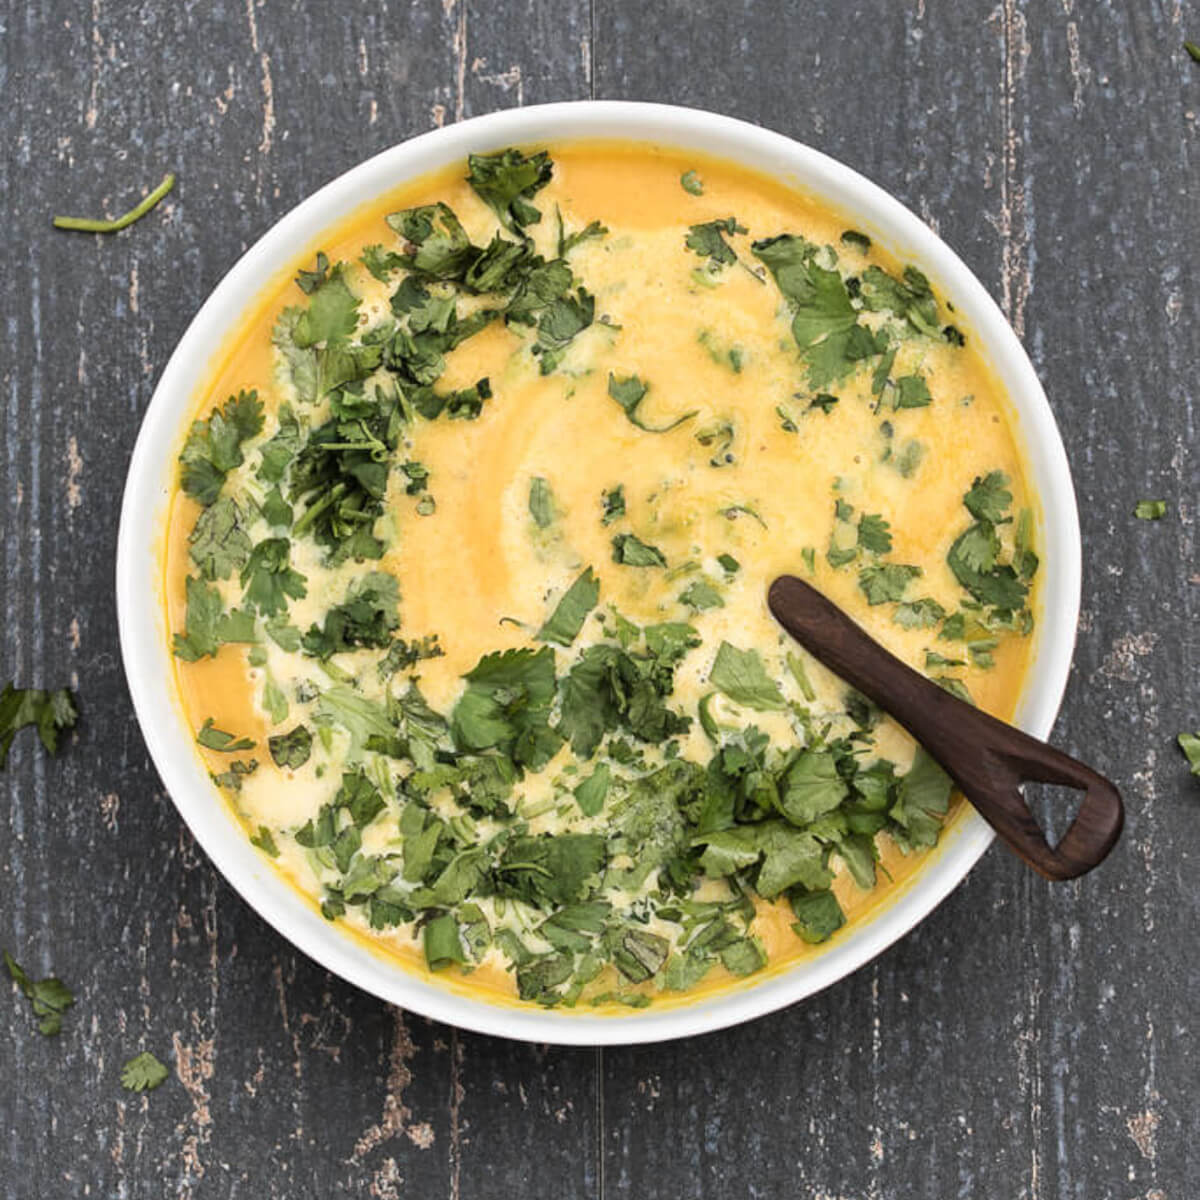 Coriander Carrot Soup Recipe Vegan Gluten-free /// VeganFamilyRecipes.com #healthy #autumn